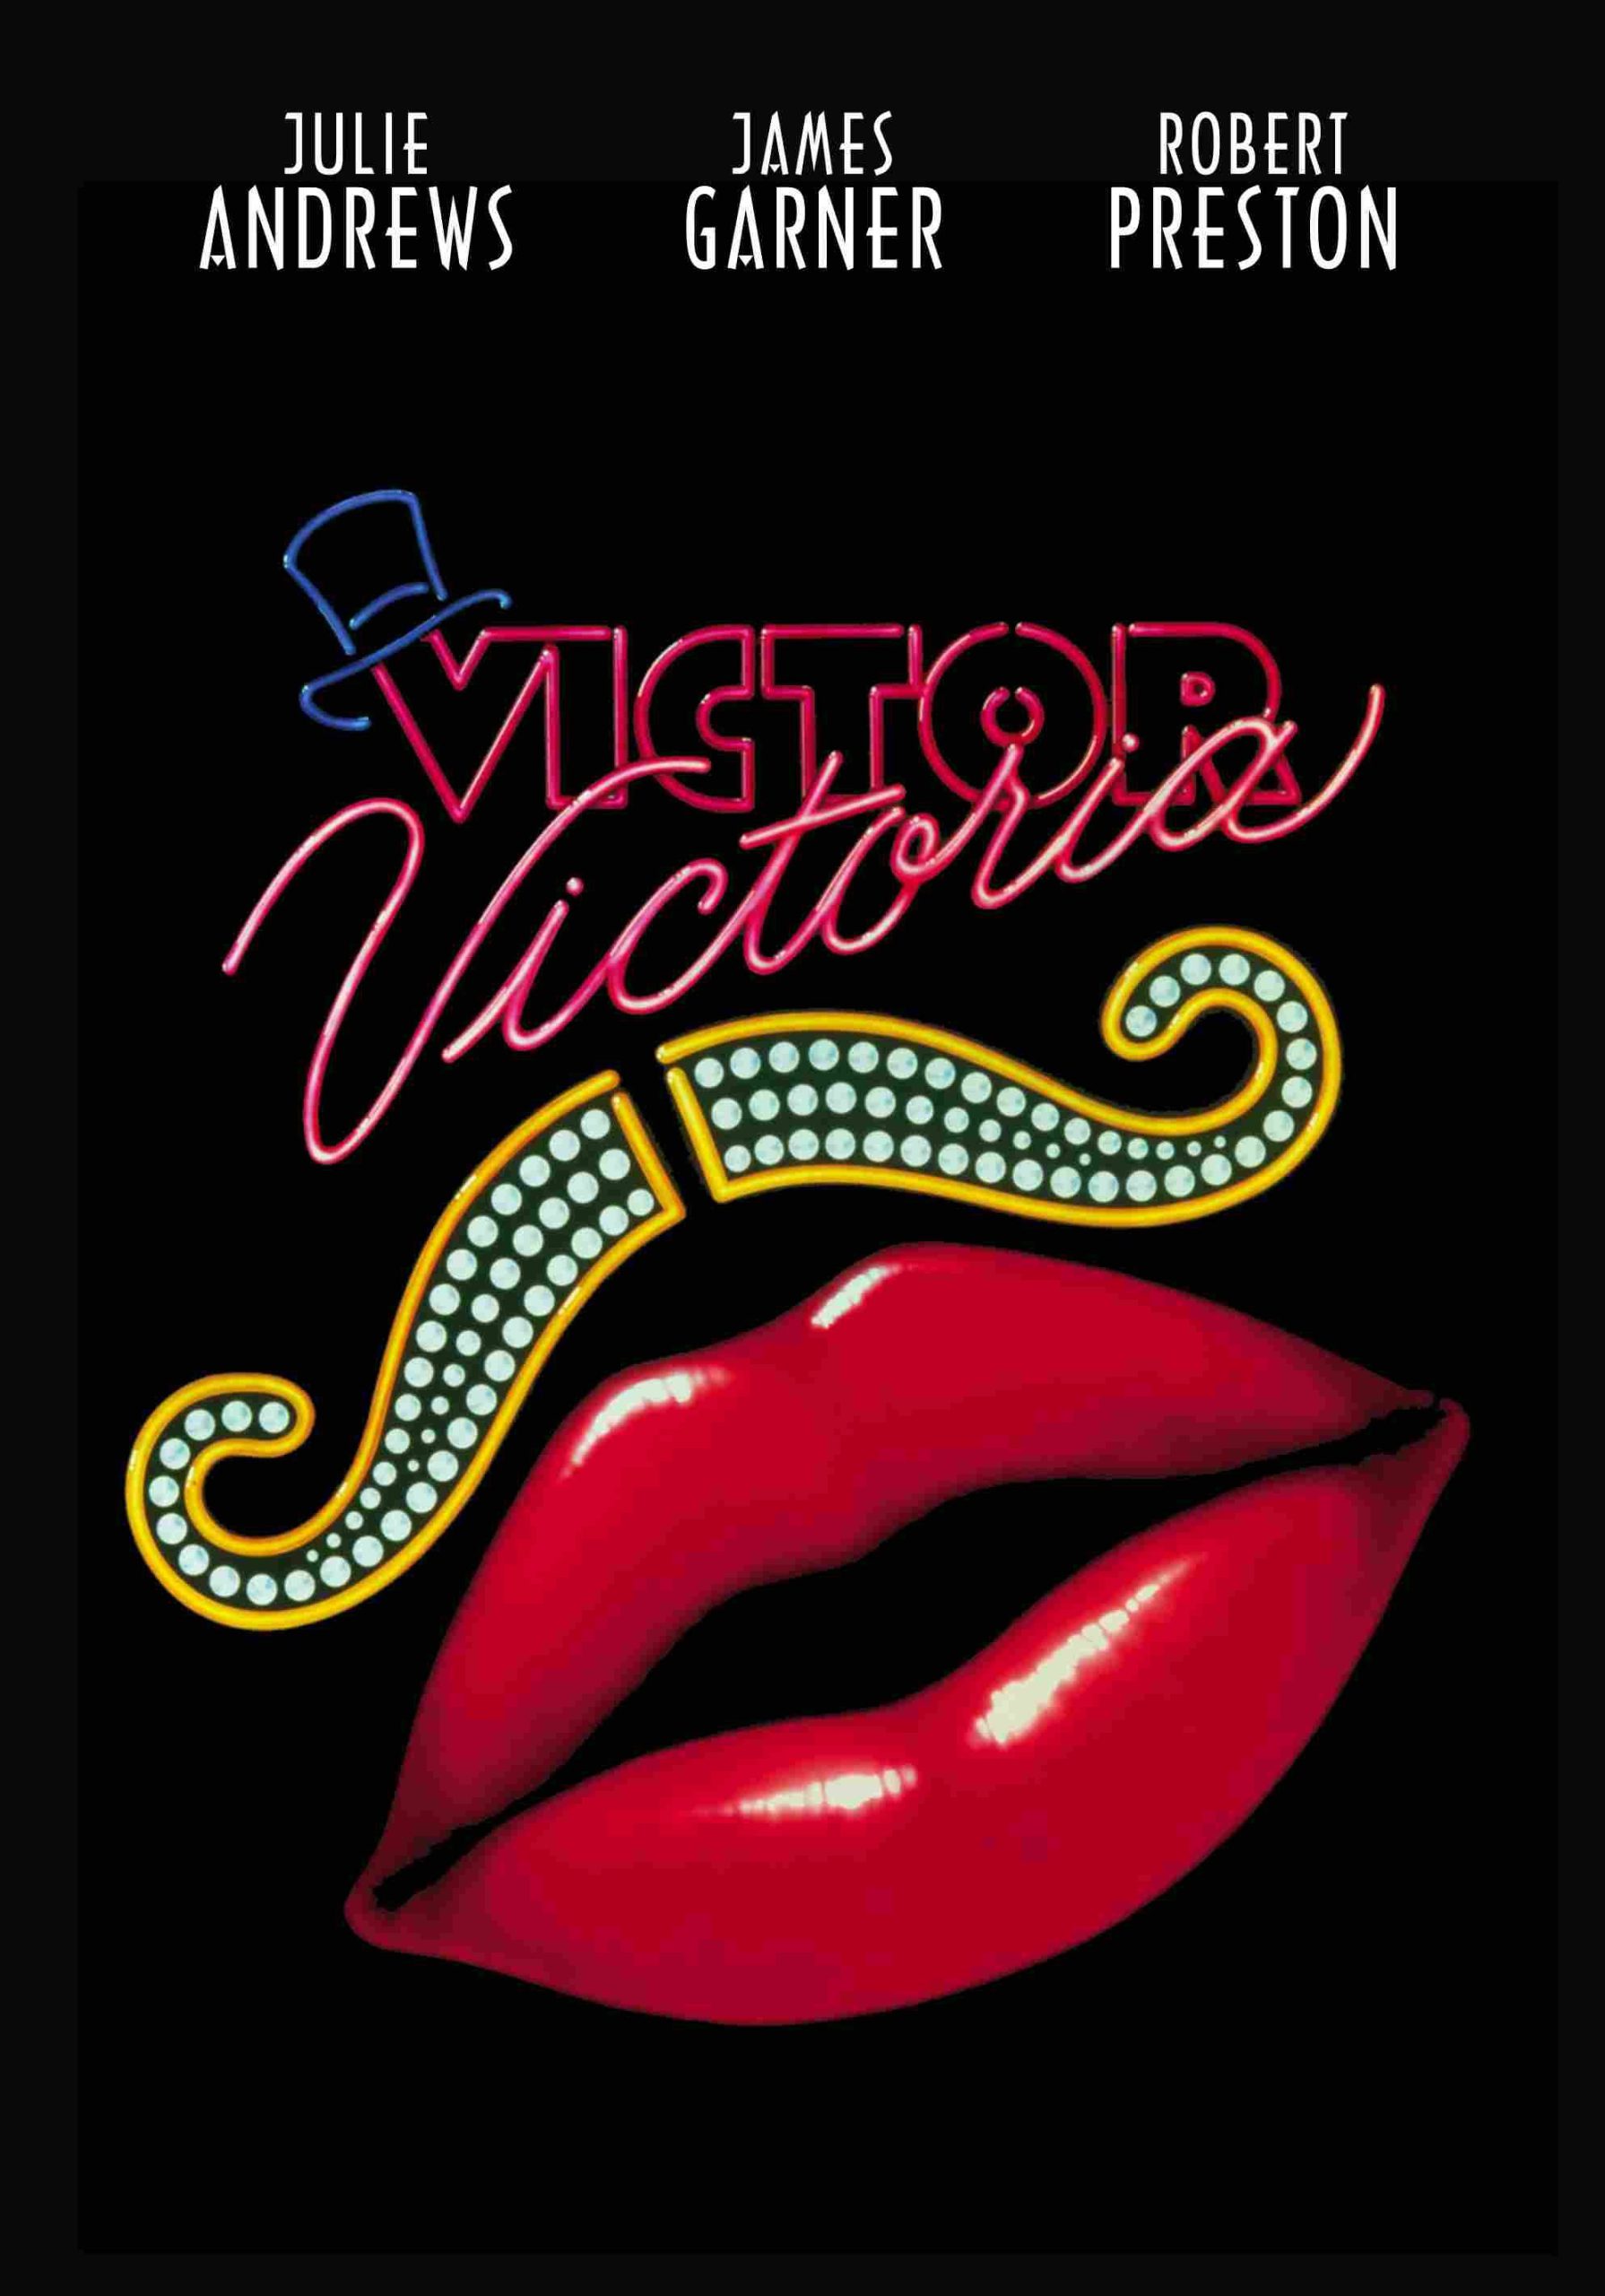 Victor Victoria [HD] (1982)